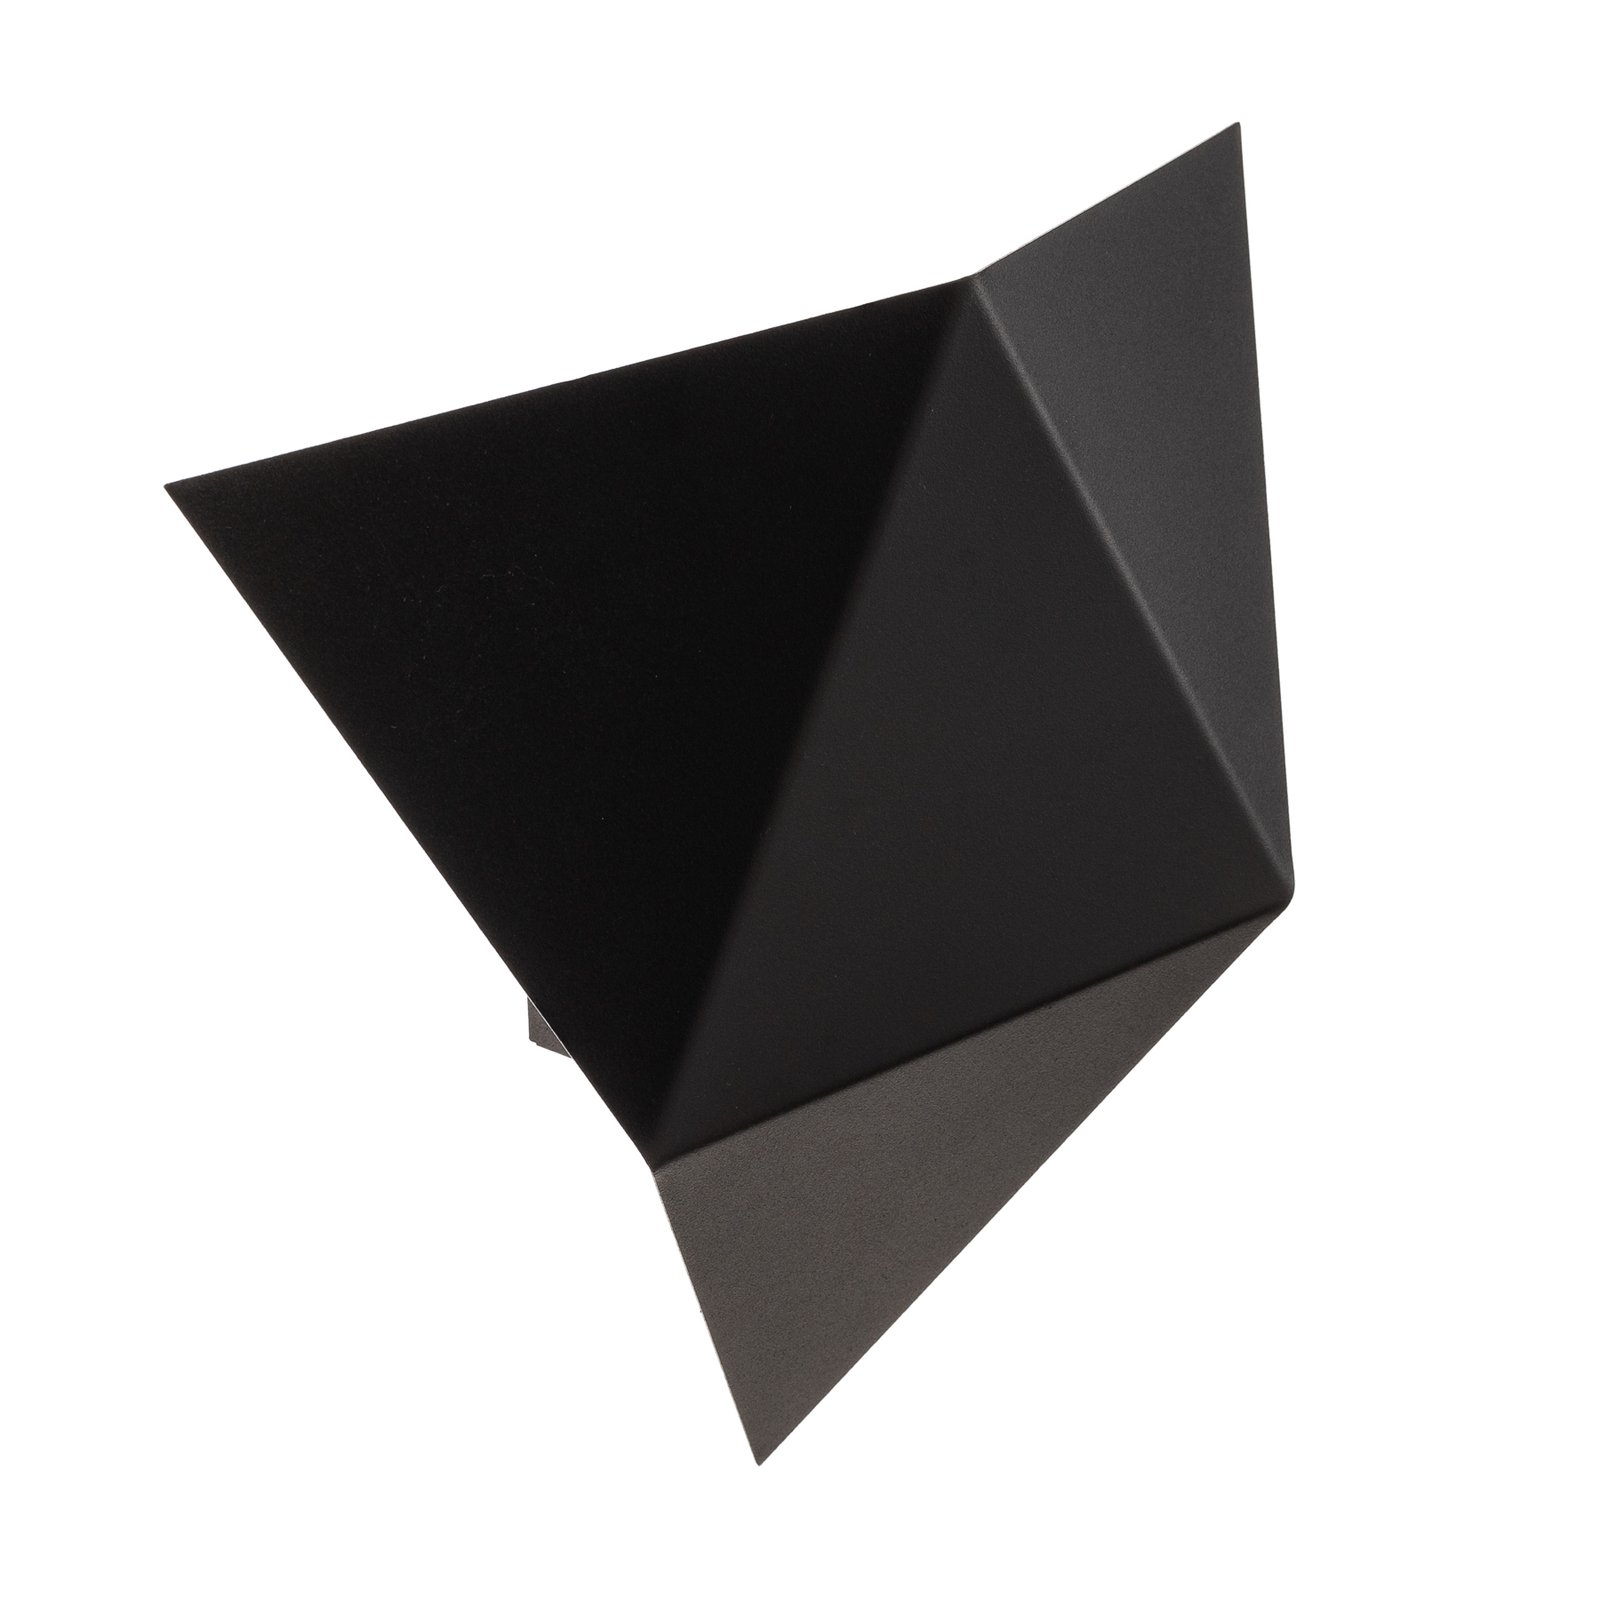 Shield vegglampe i kantet form, svart